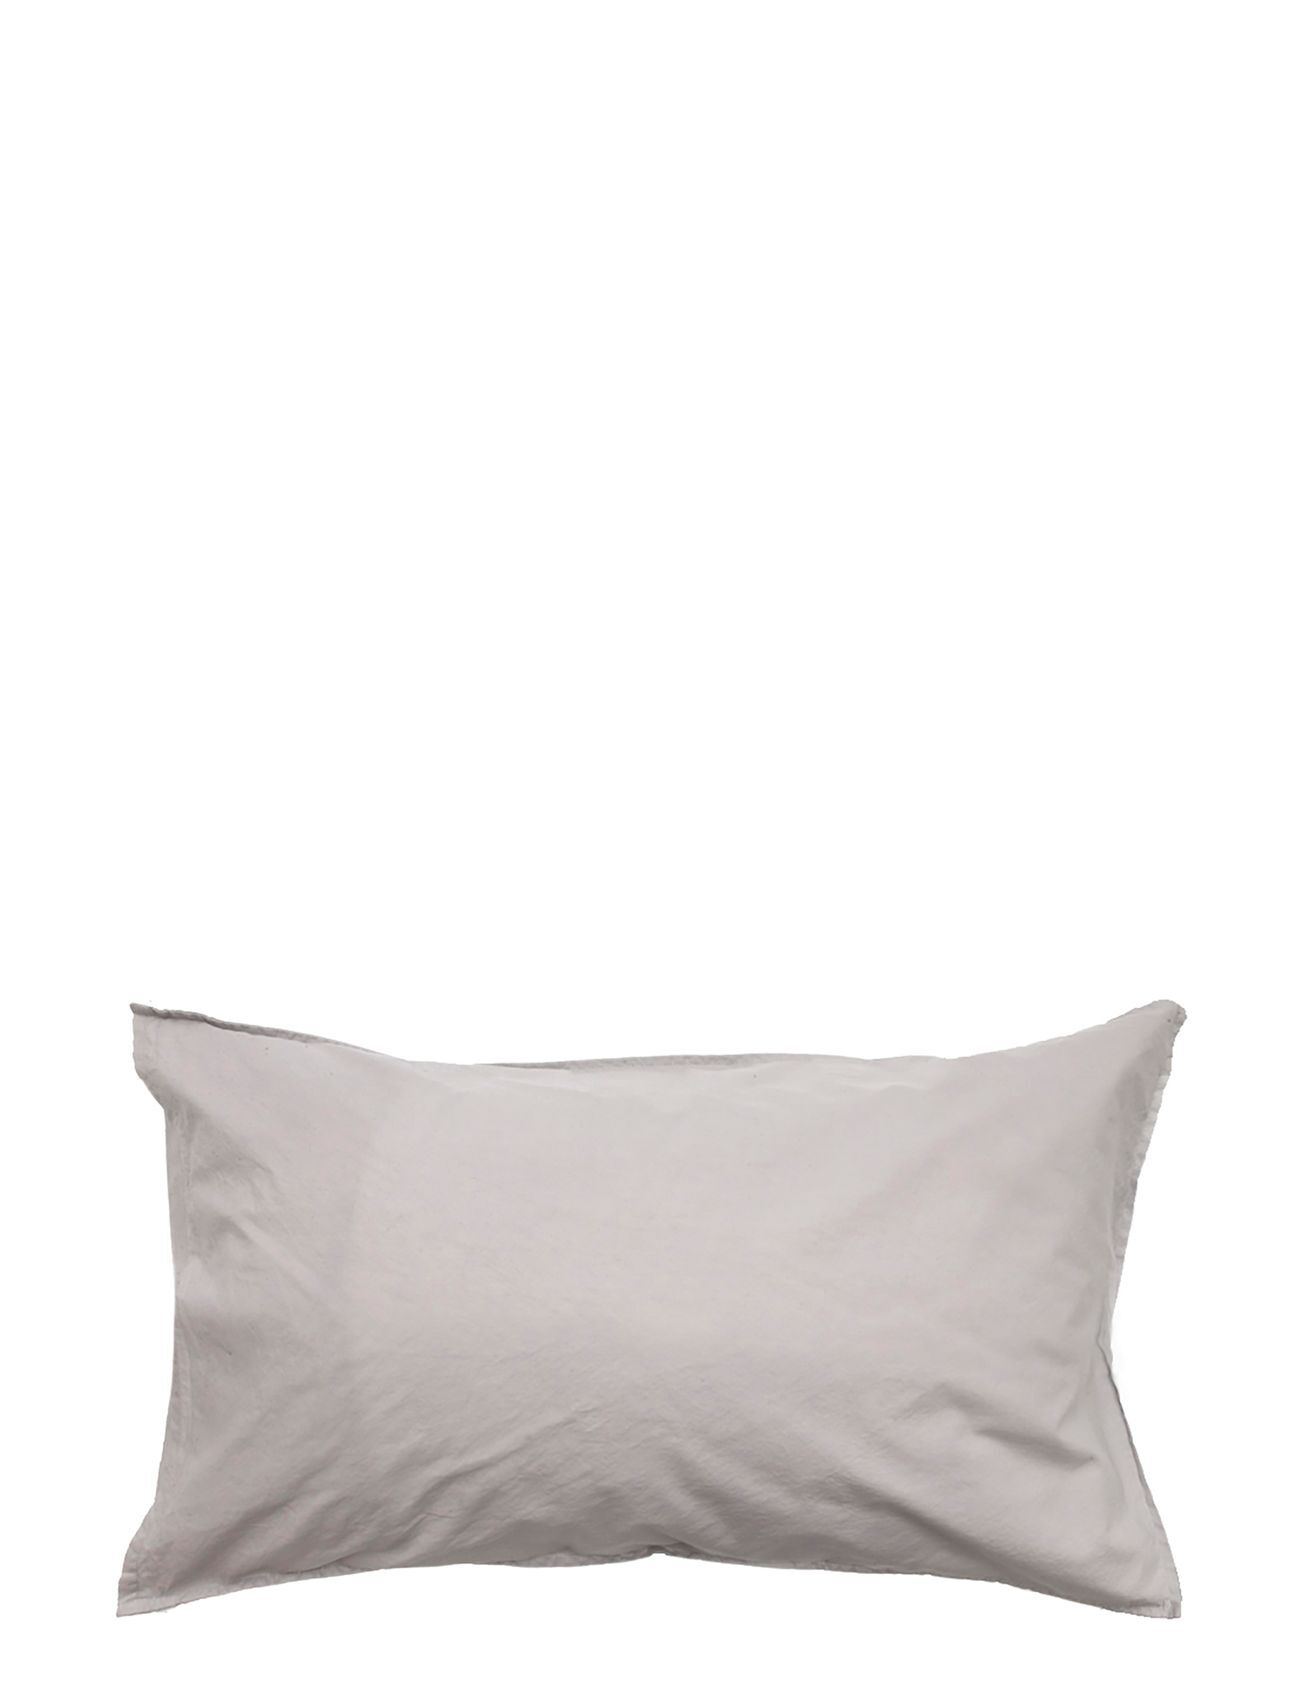 Himla Hope Plain Pillowcase Home Textiles Bedtextiles Pillow Cases Grå Himla